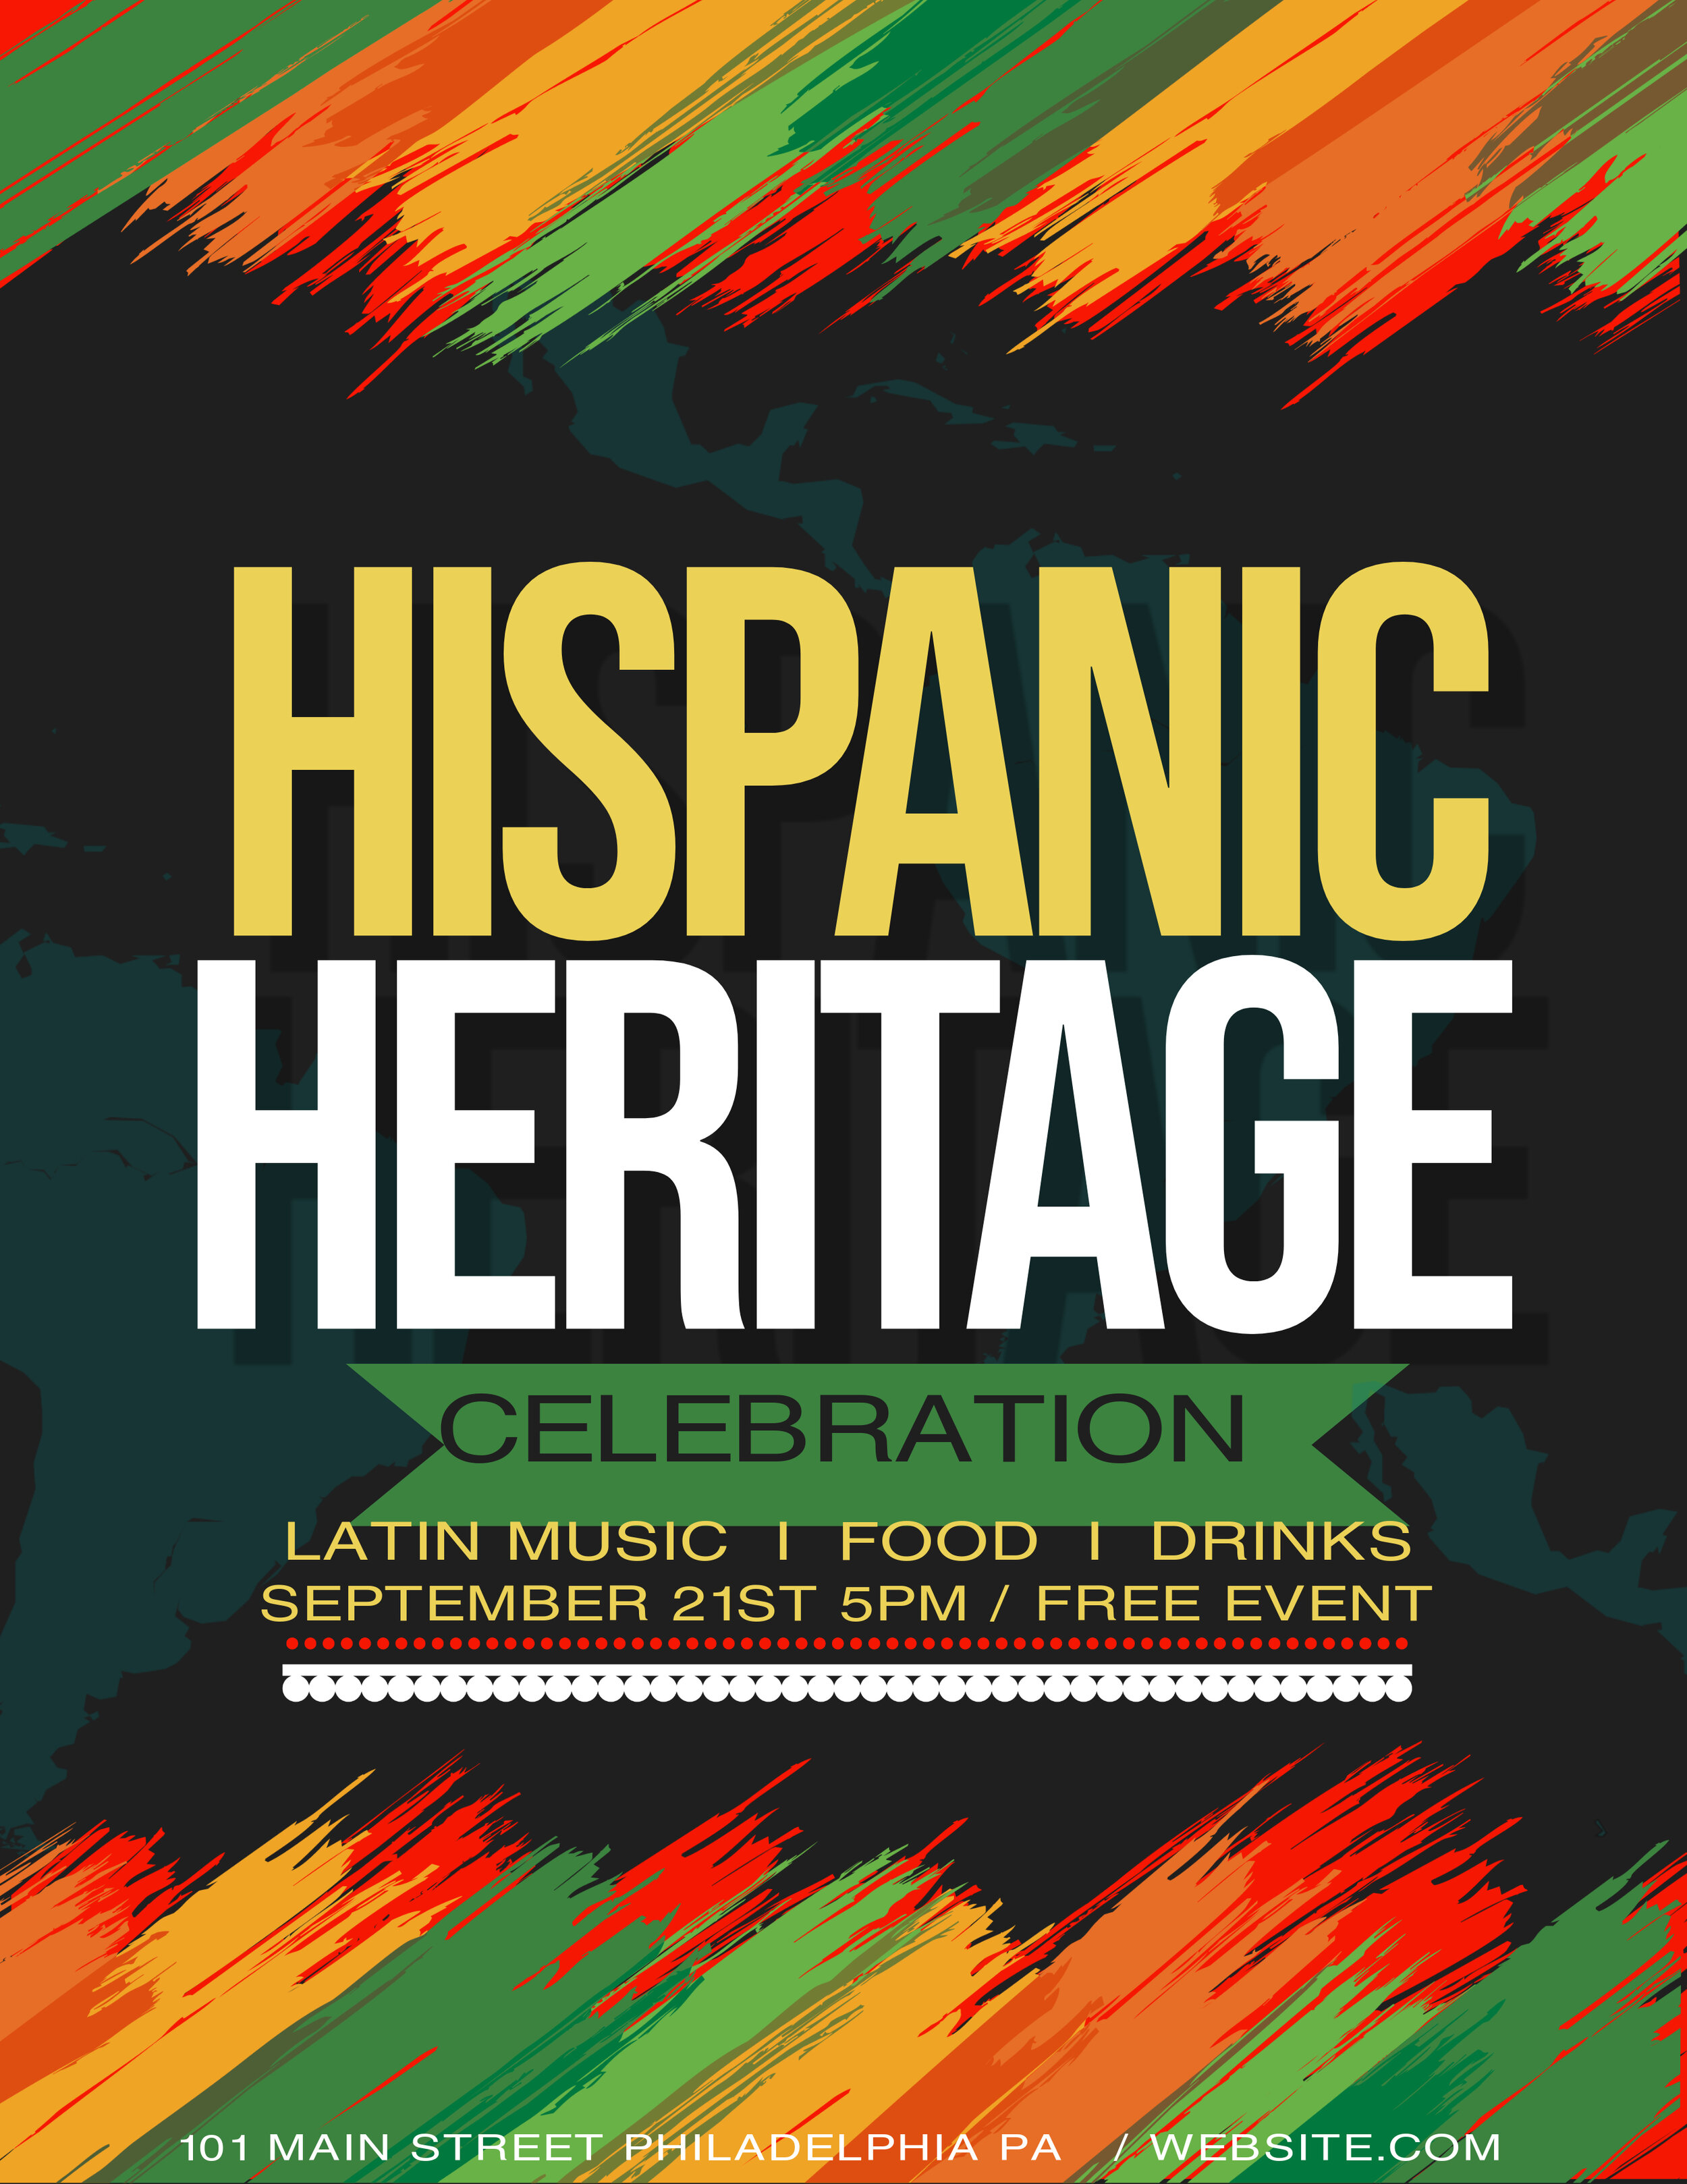 Hispanic heritage month poster